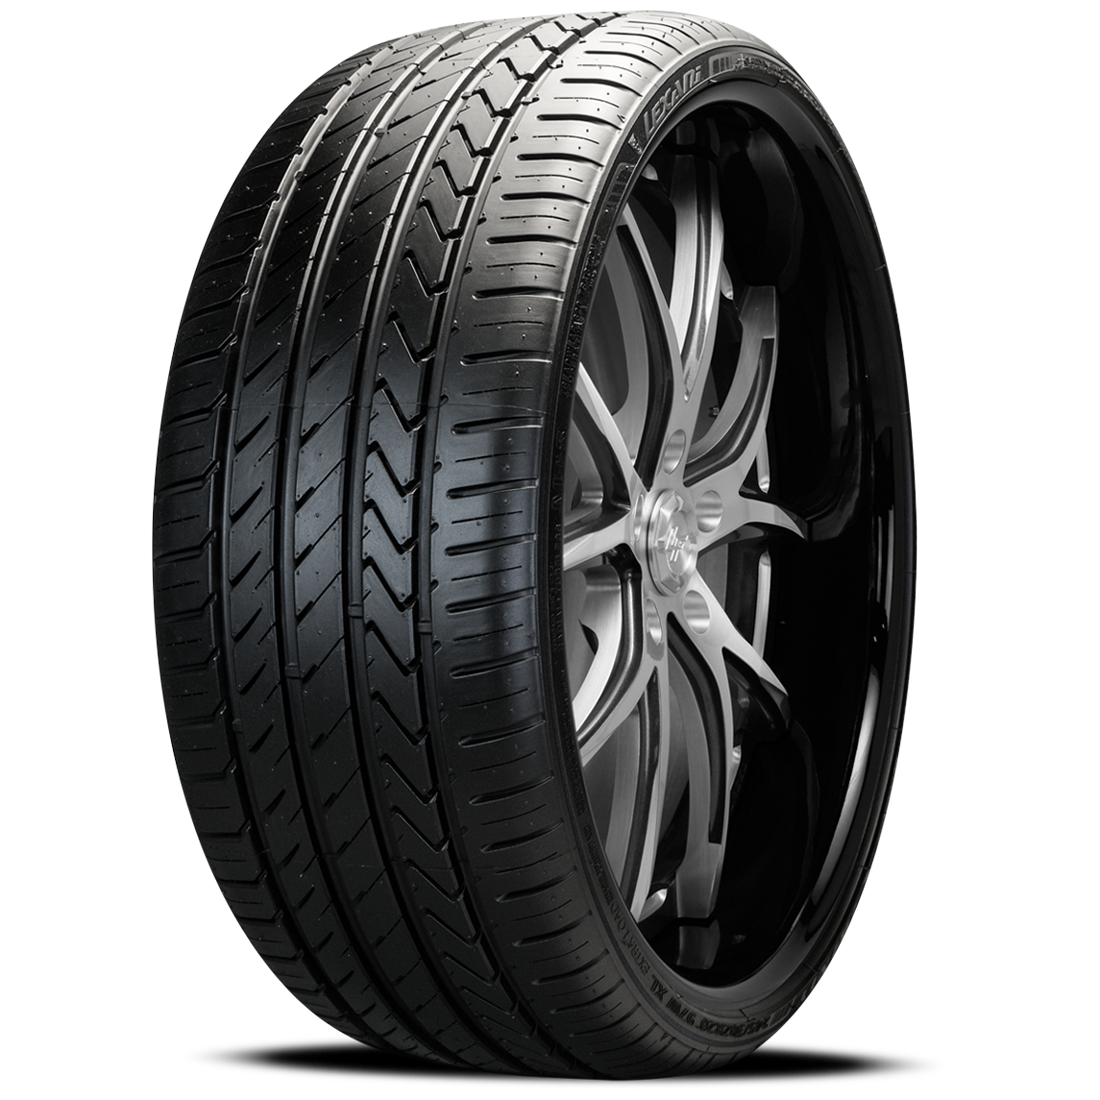 LEXANI LX-TWENTY 225/40ZR19 (26.1X9.1R 19) Tires